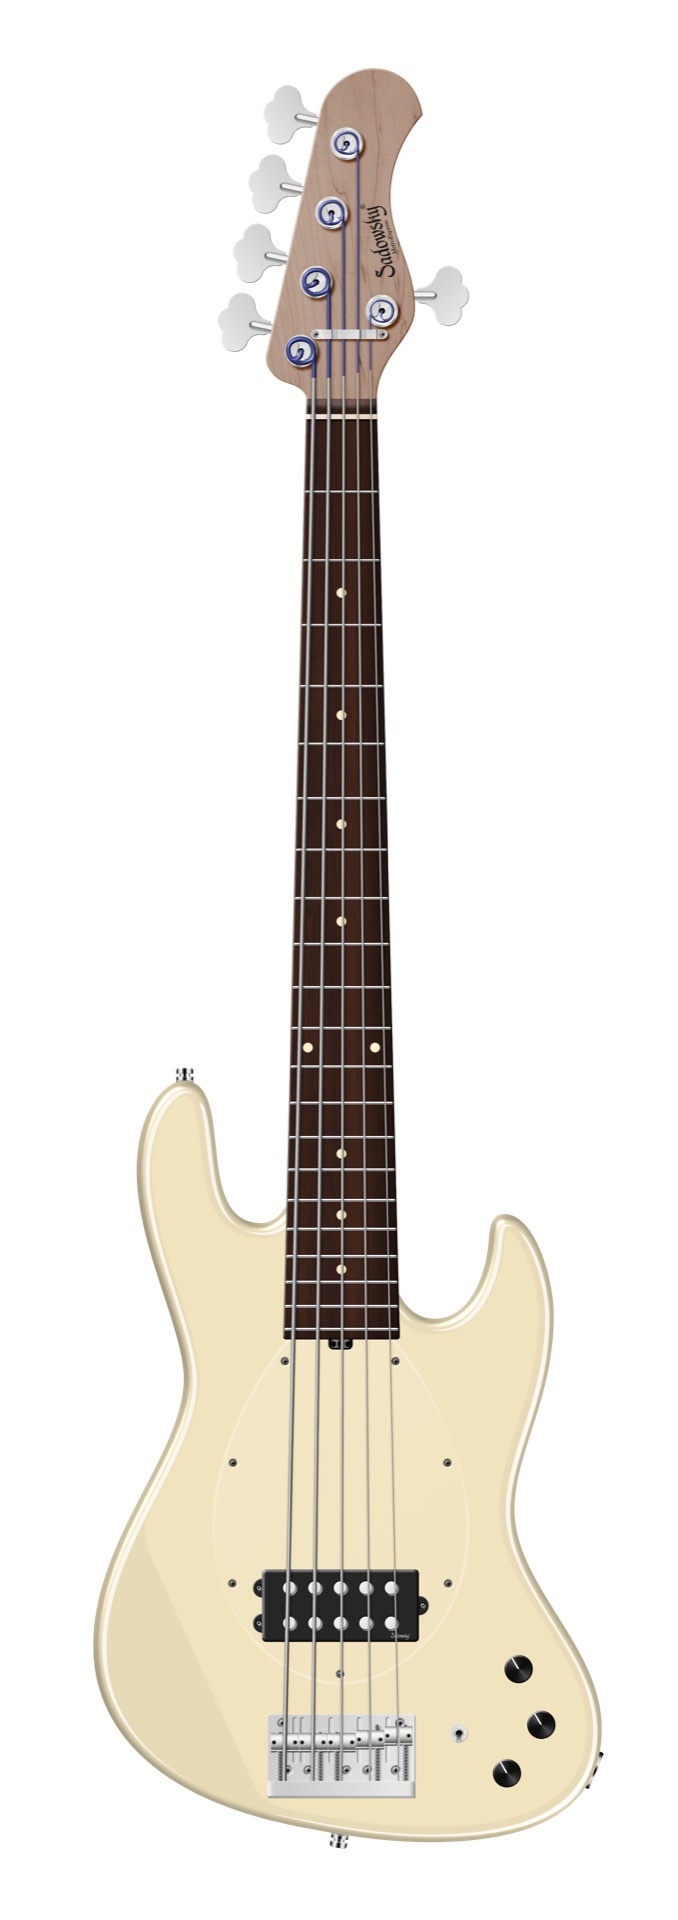 Sadowsky MetroExpress 21-Fret Vintage M Bass, Morado Fingerboard, 5-String - Solid Olympic White High Polish